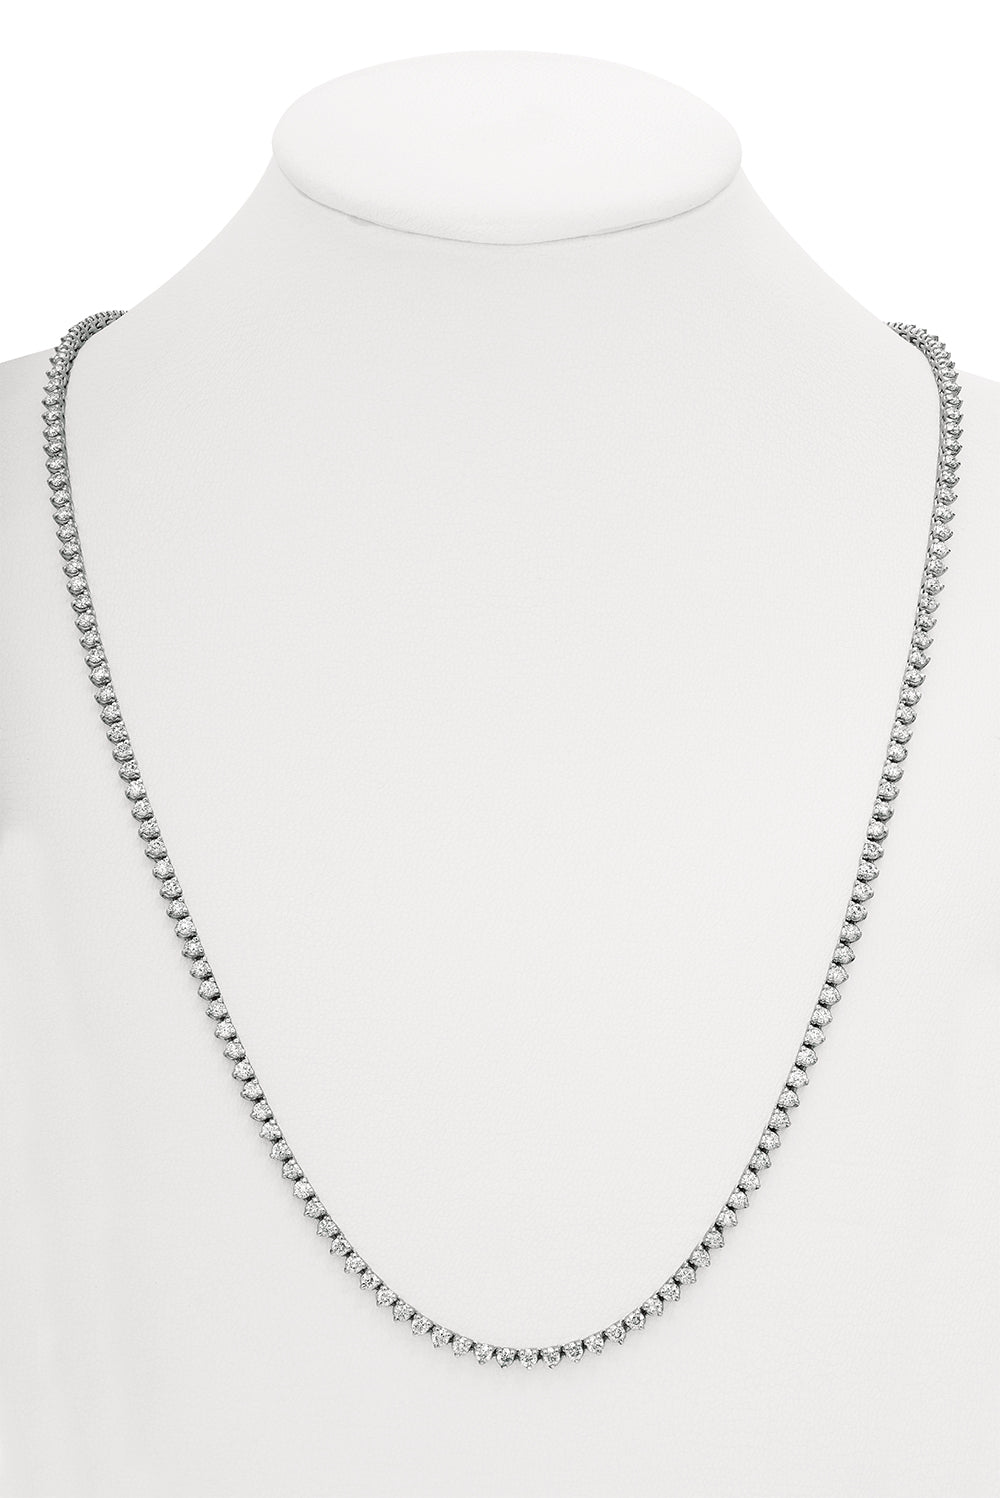 Discover Luxurious Diamond Necklaces at Davizi Jewels | NYC